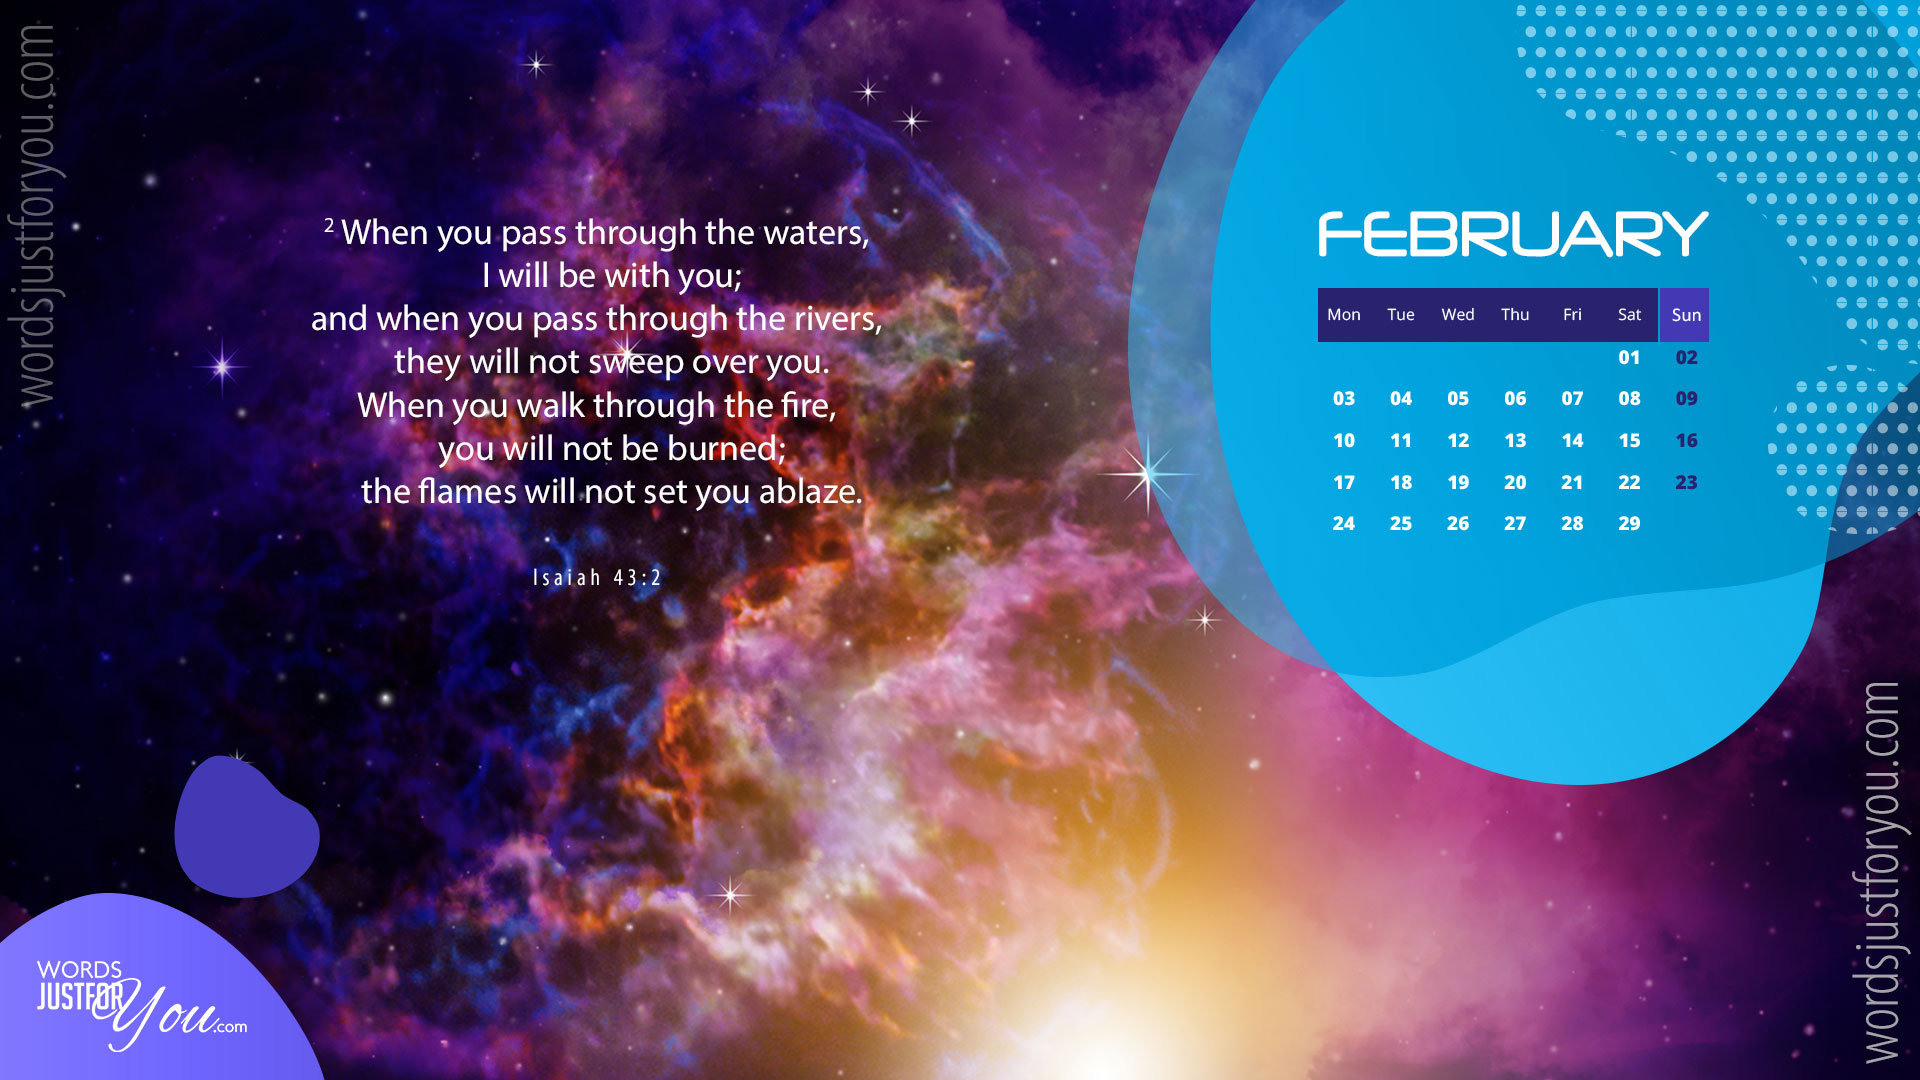 Hd February 2020 Calendar Desktop - Deep Space Nebula - HD Wallpaper 